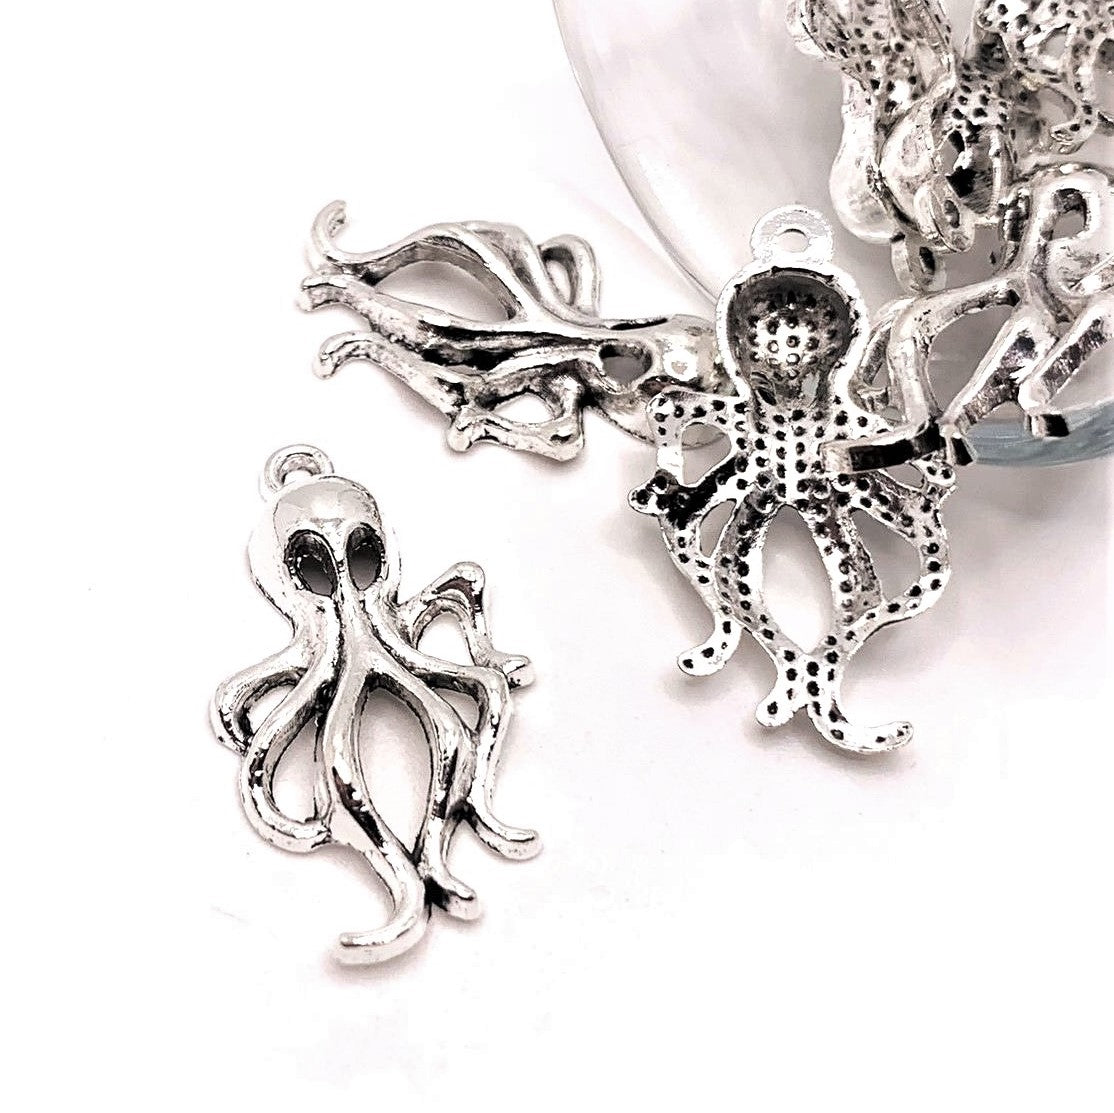 4, 20 or 50 Pieces: Silver Octopus Kraken Charms